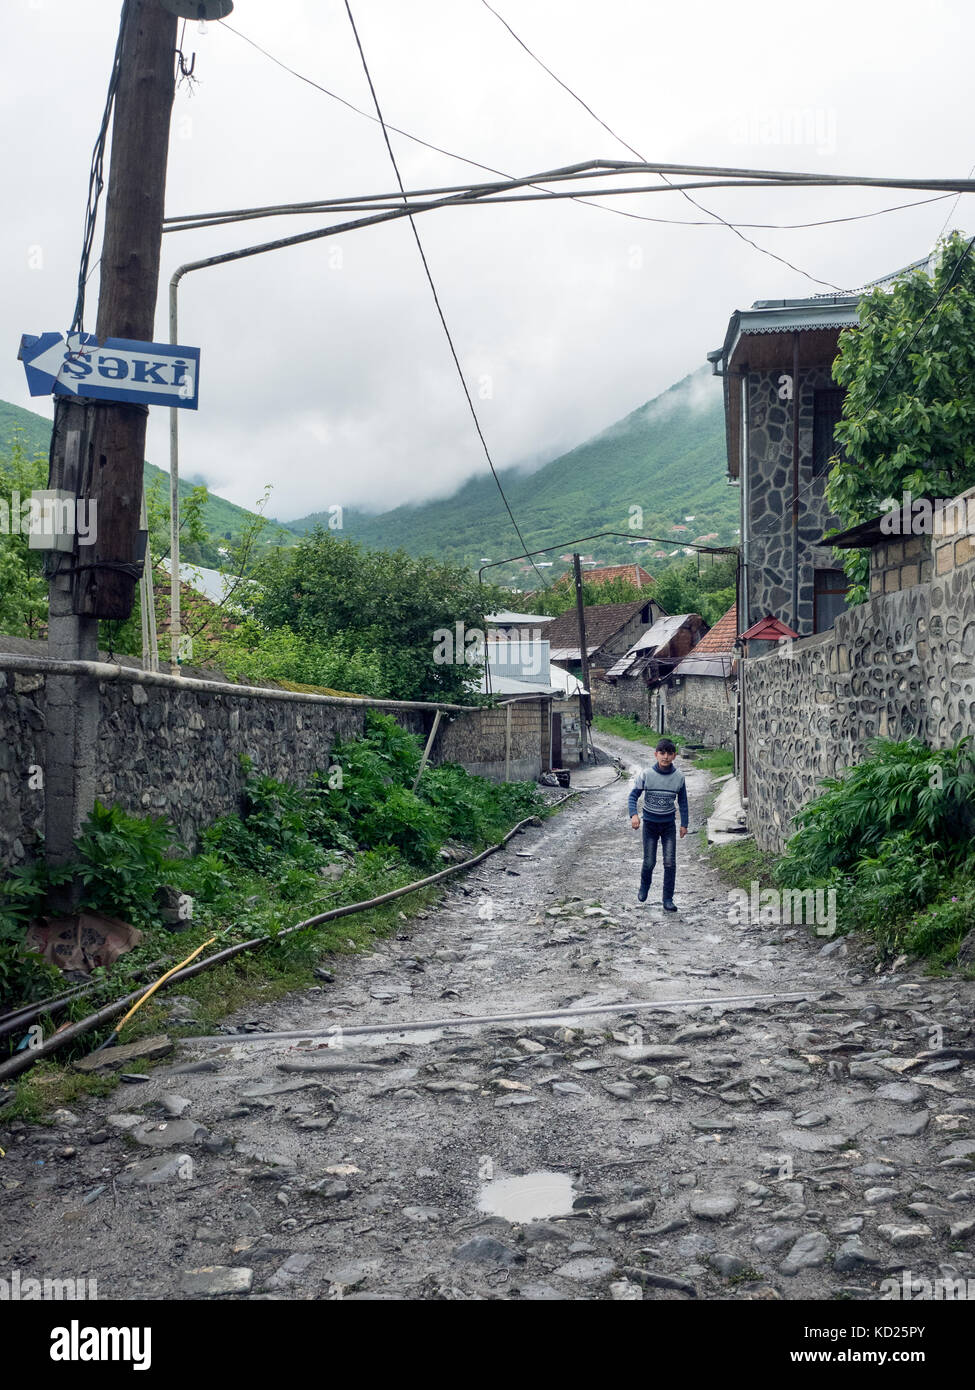 Boy waliking in a road of Kish, a rural settlement in Sheki district, northern Azerbaijan Stock Photo